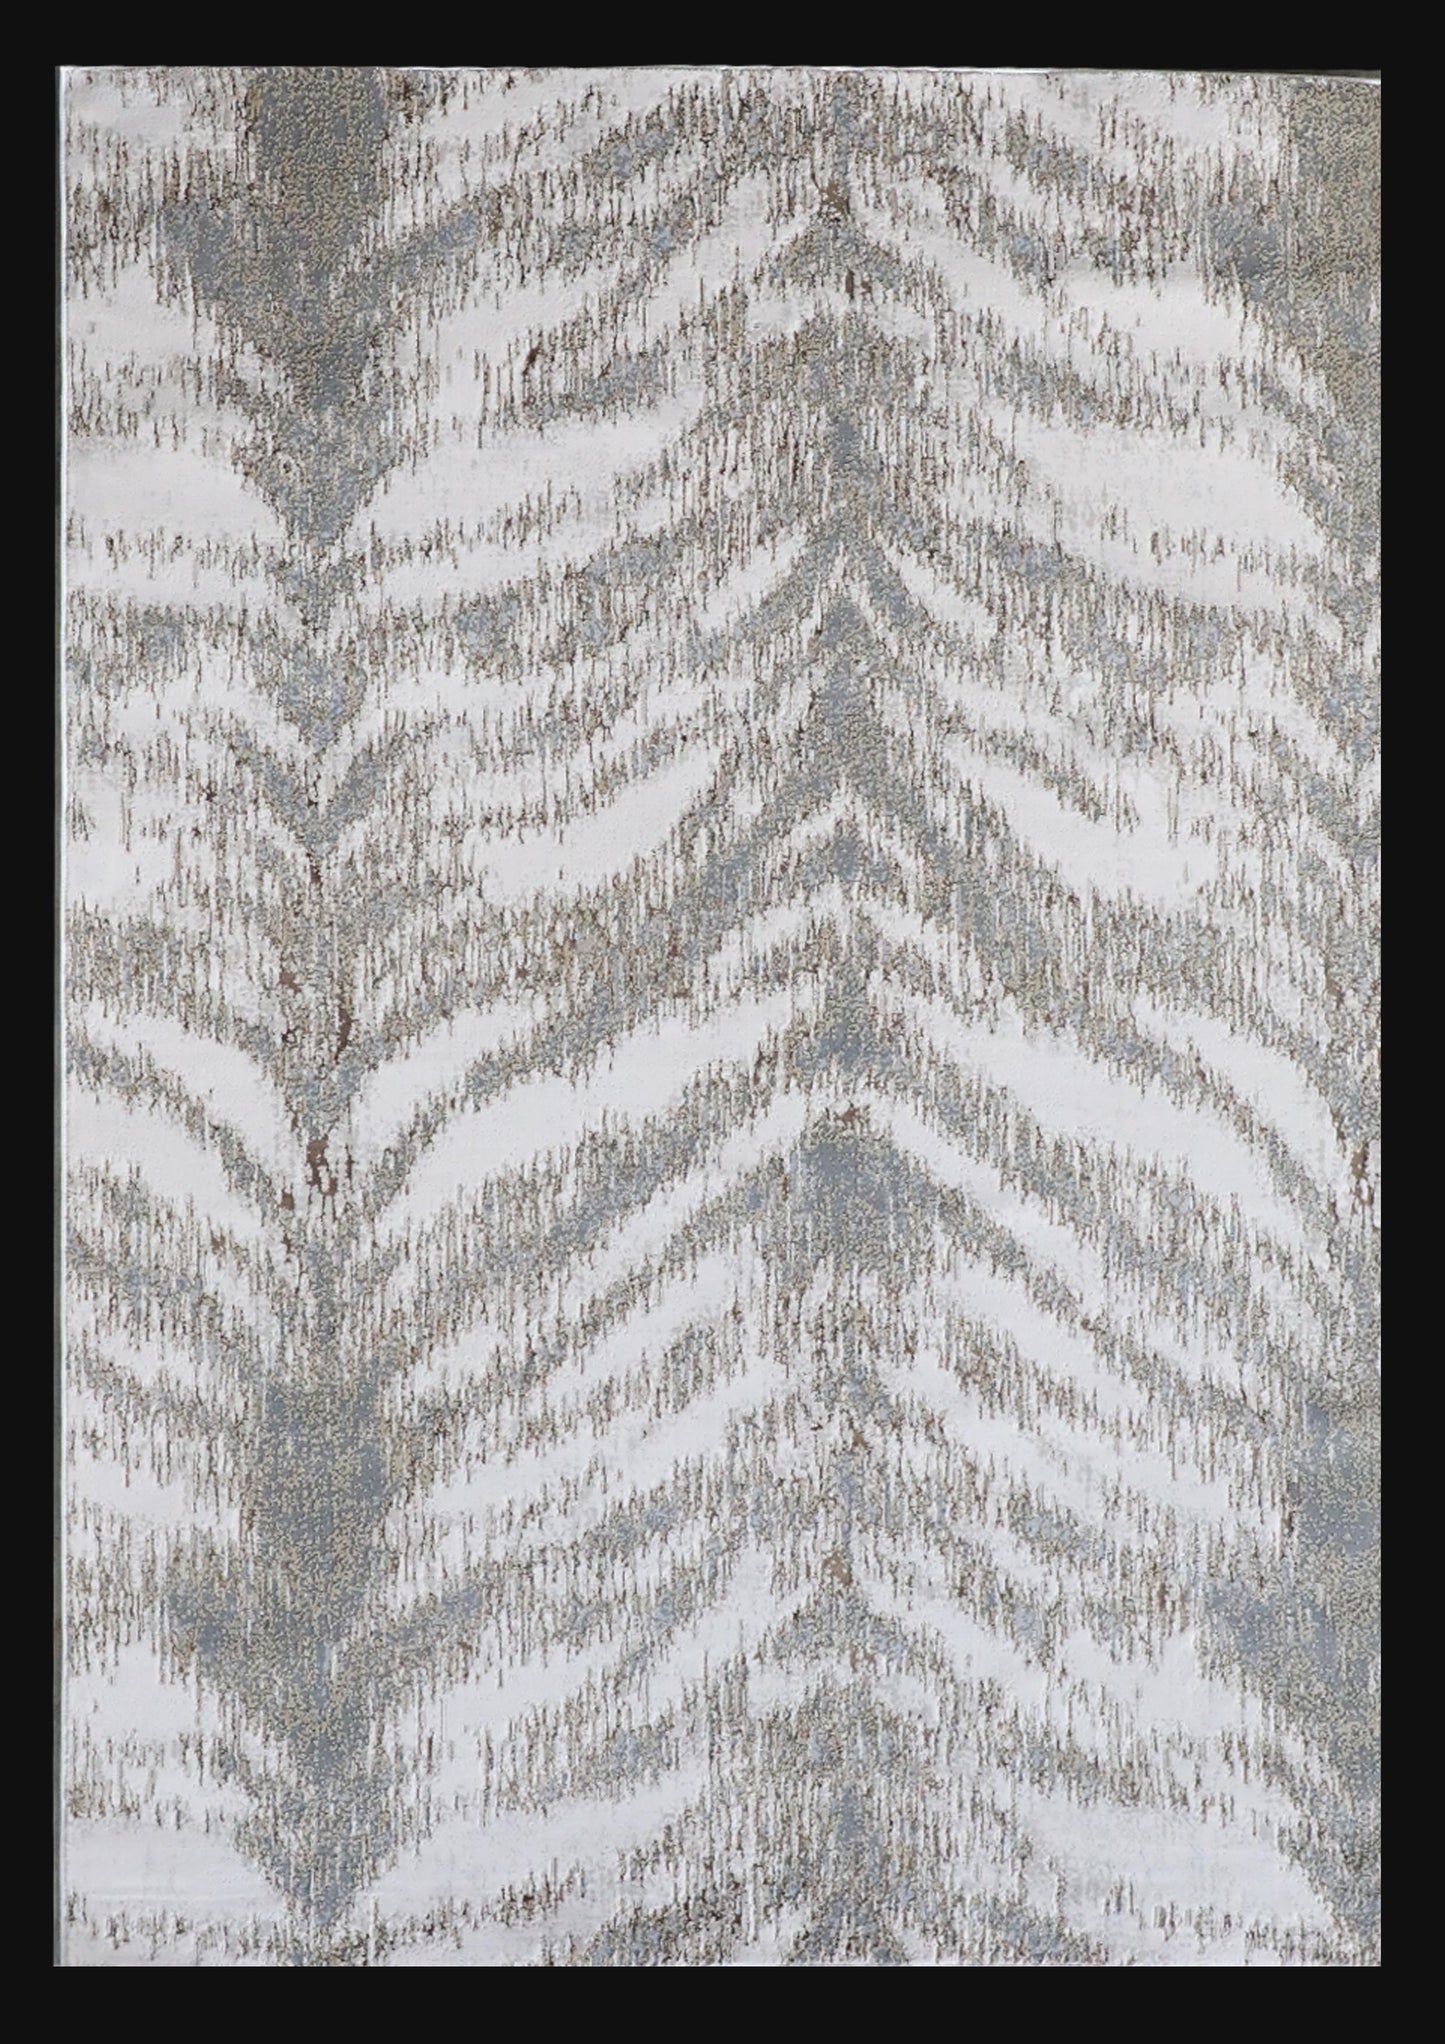 Silver Shimmery Changing Safari Zebra Animal Print Ultra Soft Cozy Area Rug/Carpet